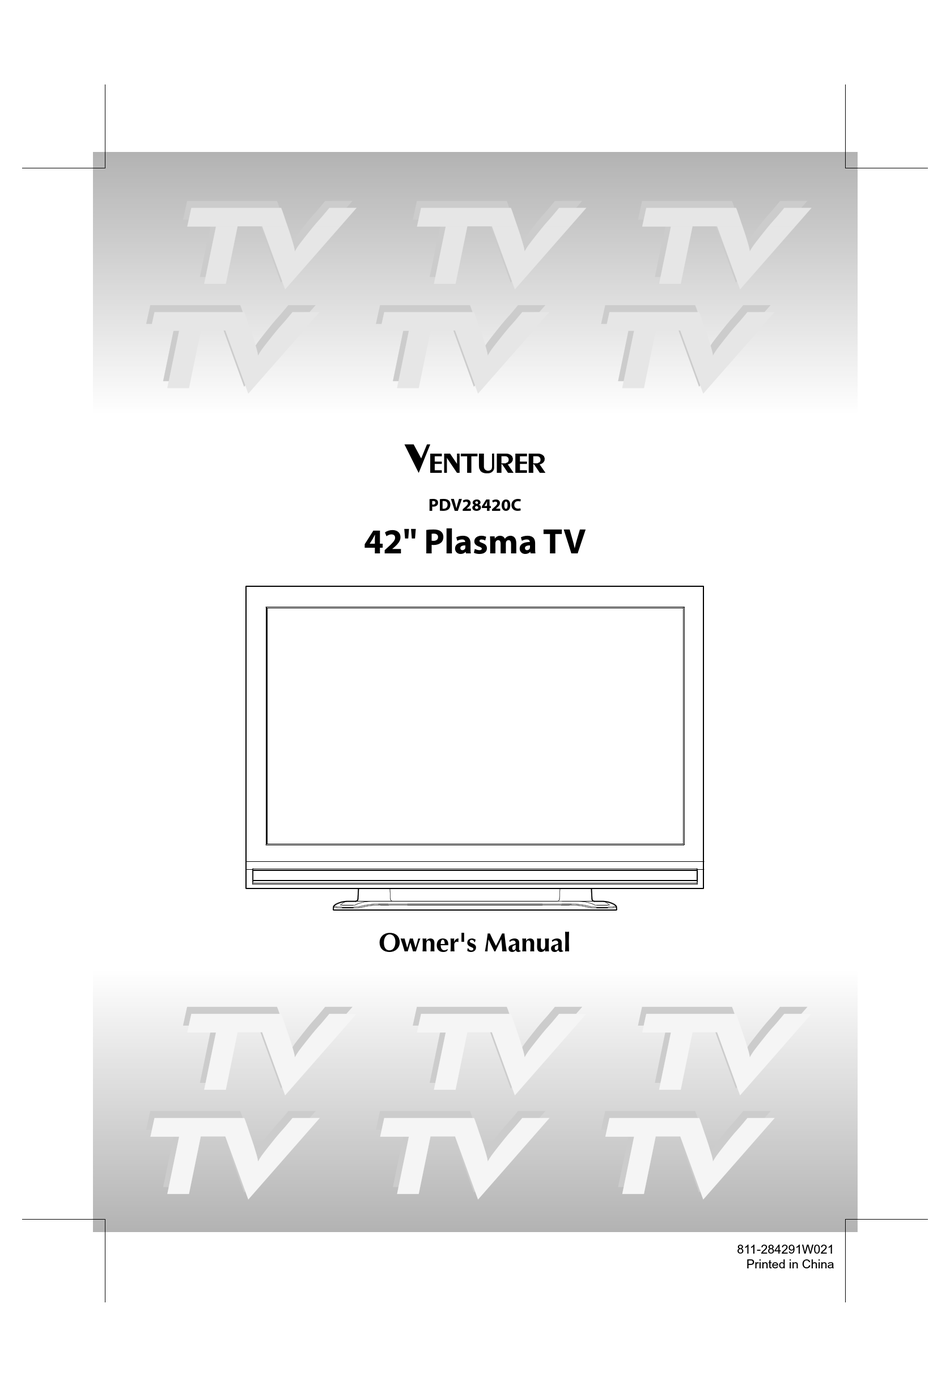 VENTURER PDV28420C OWNER'S MANUAL Pdf Download | ManualsLib